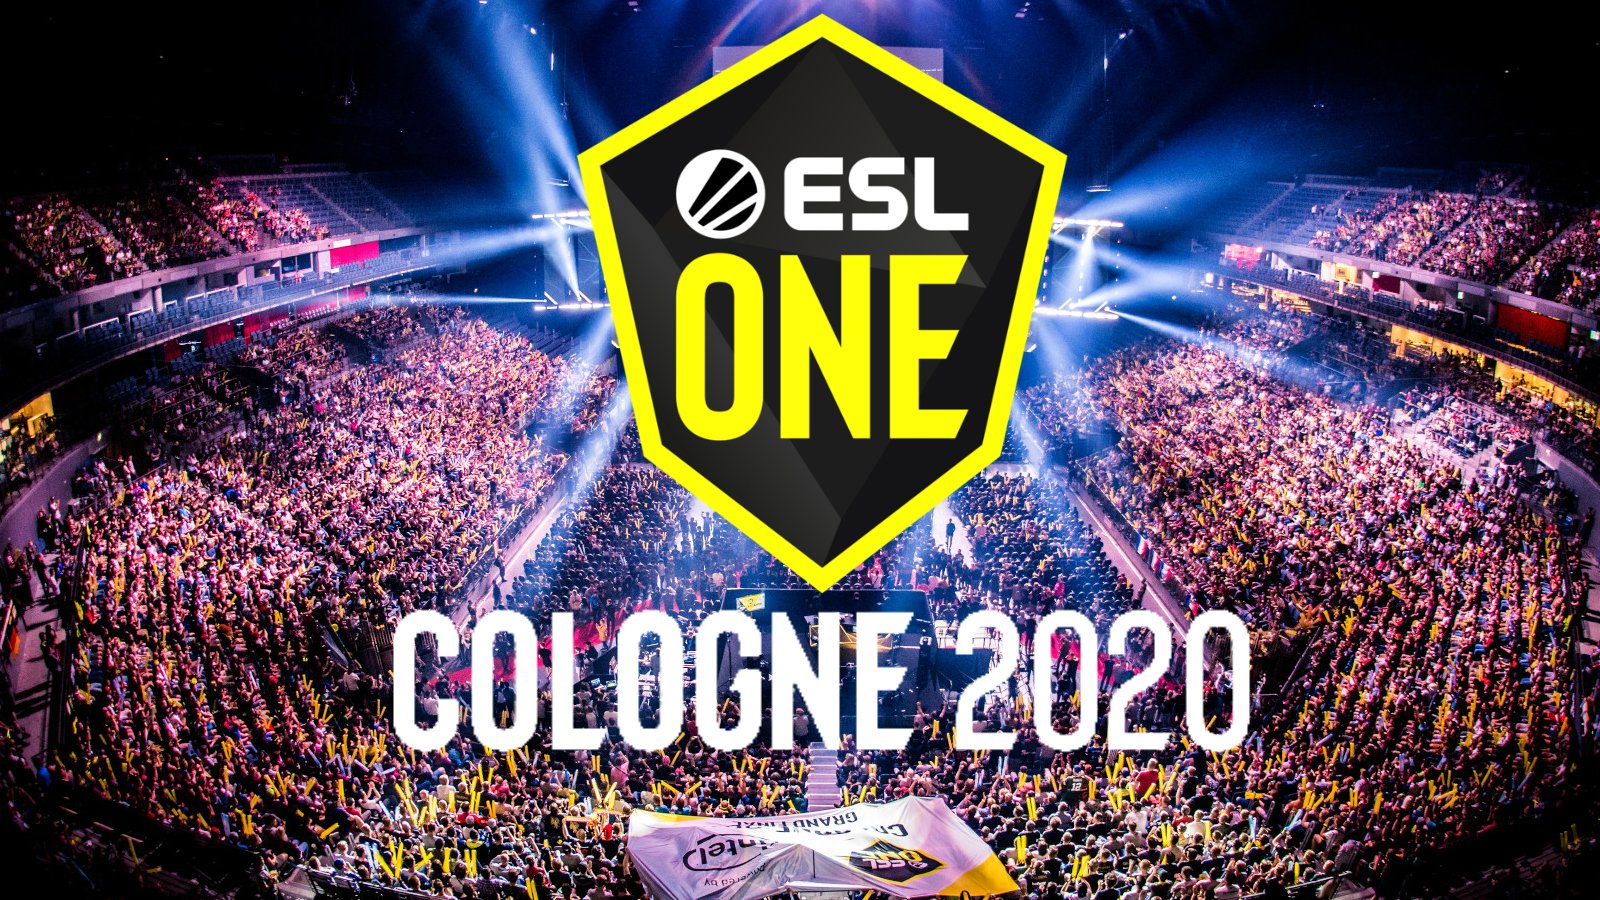 Cologne 2020